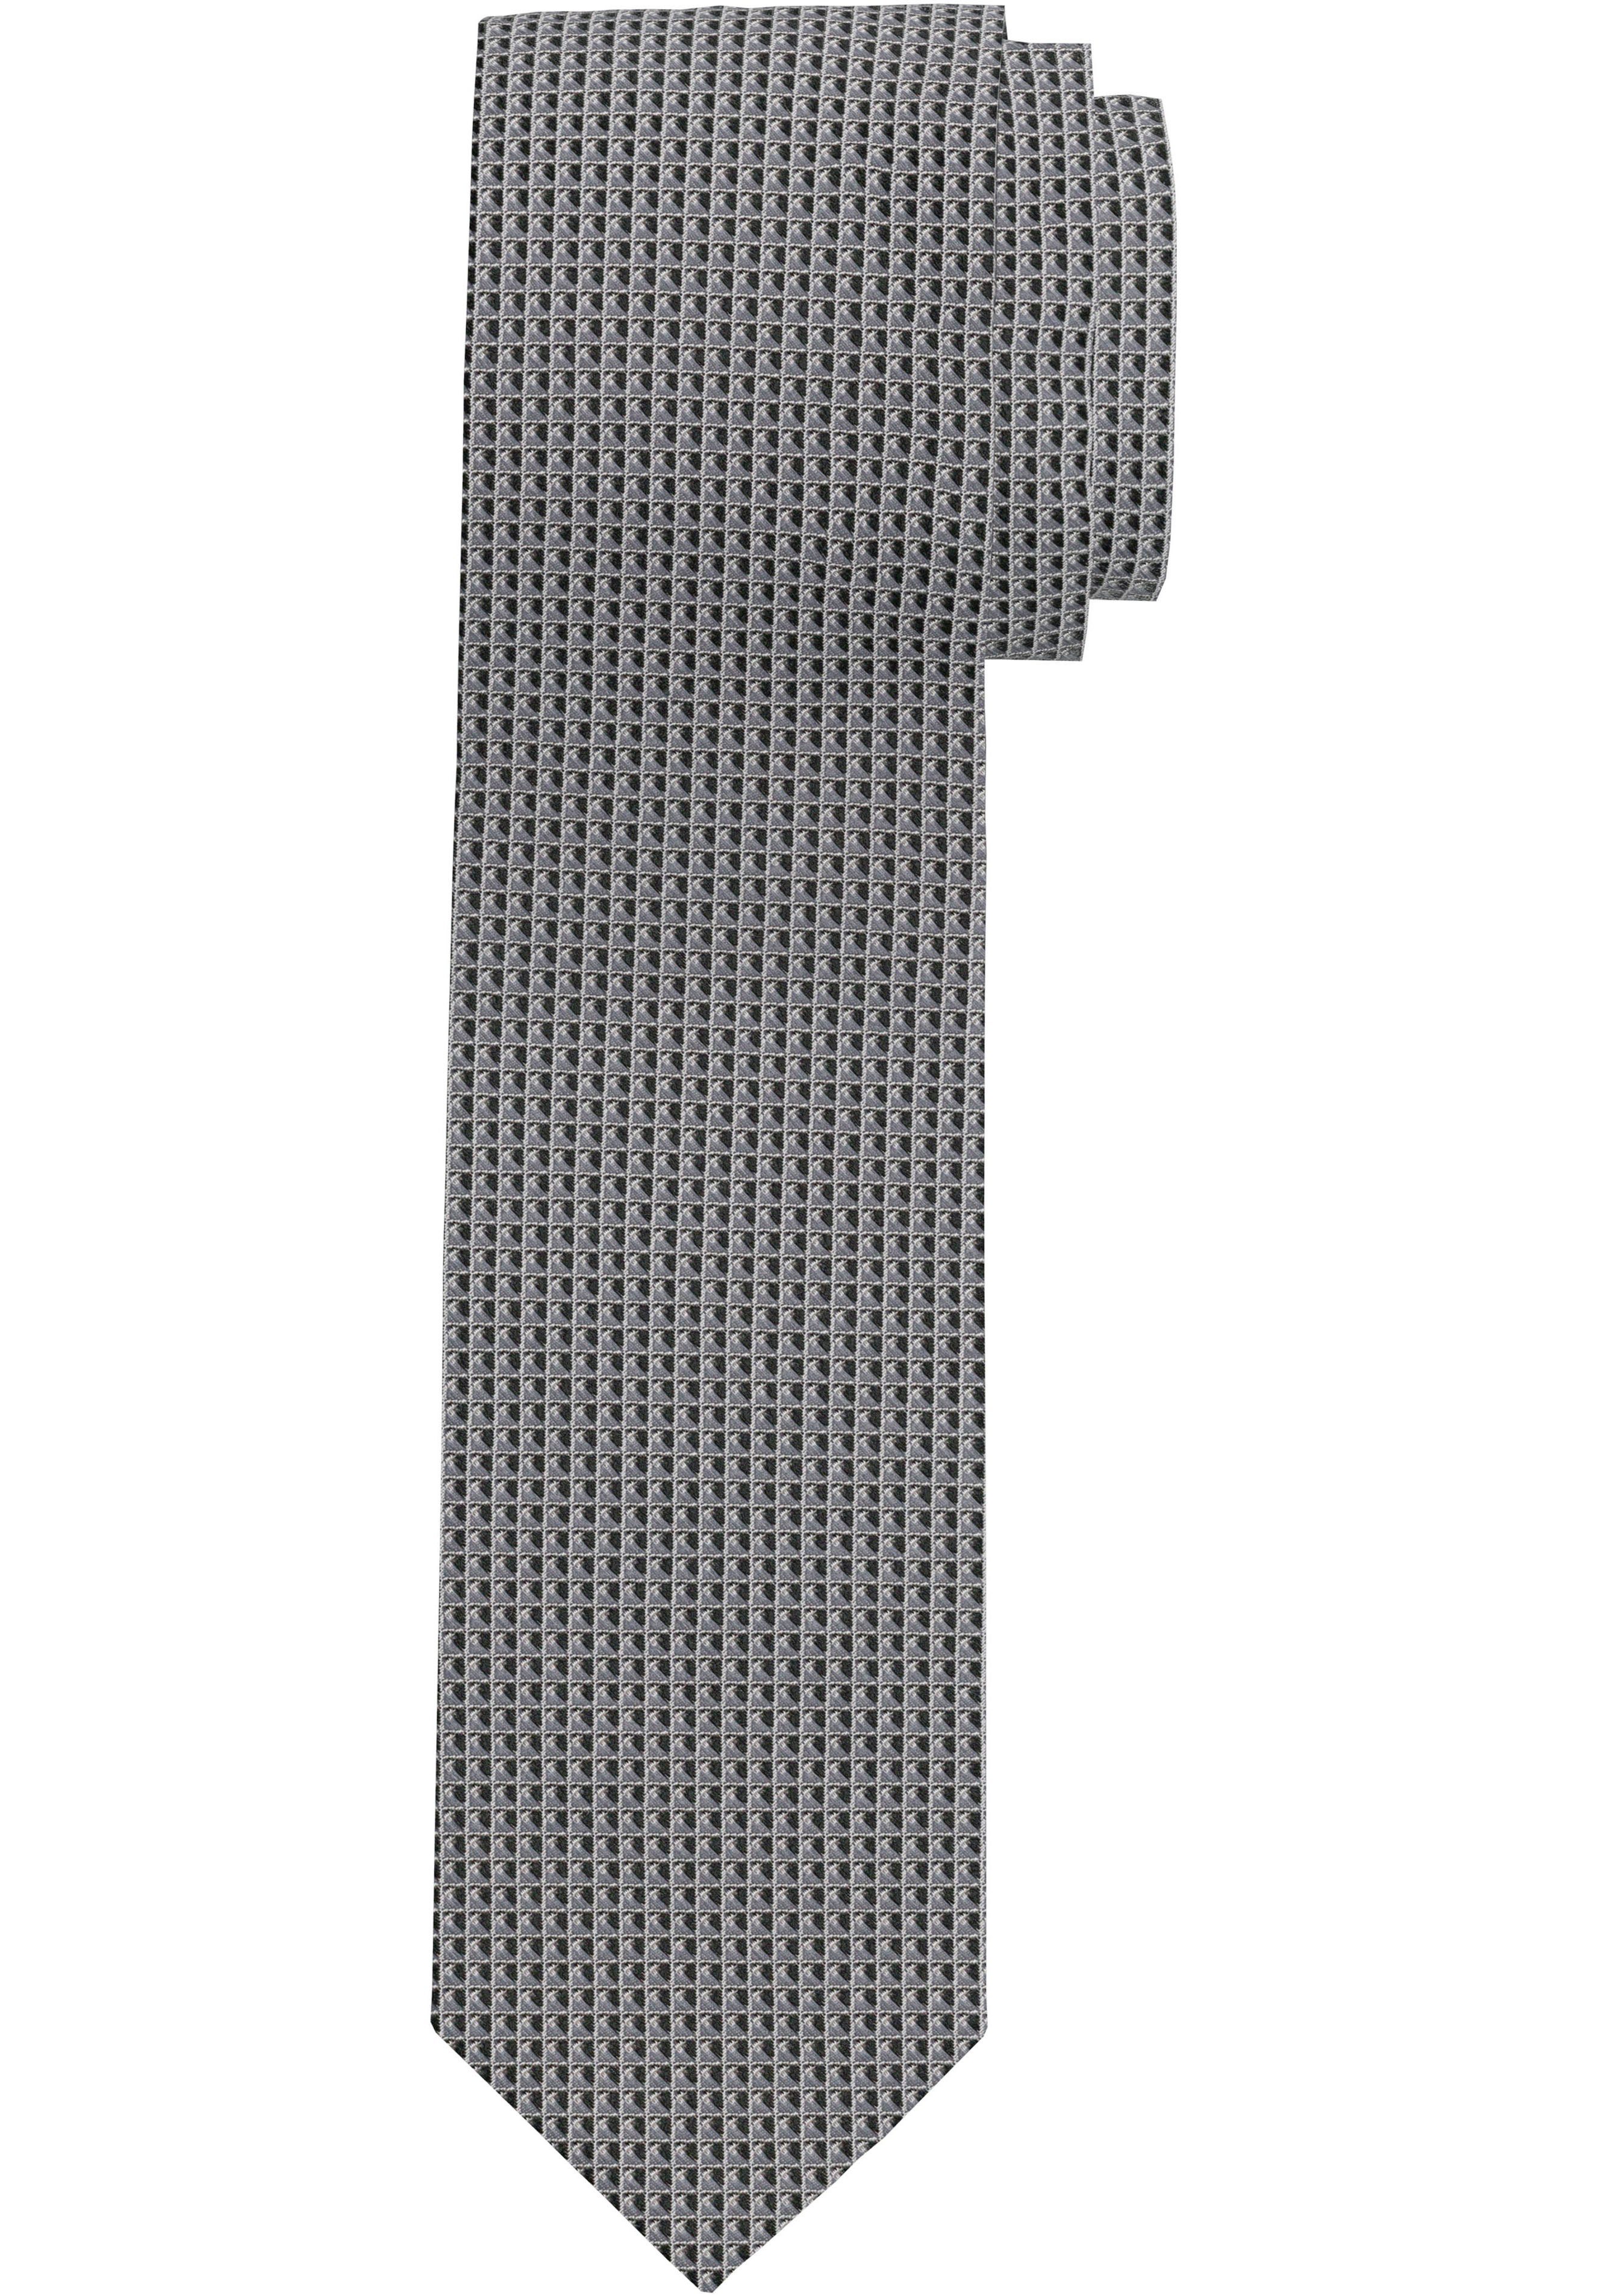 Krawatte anthrazit Krawatte OLYMP Strukturierte